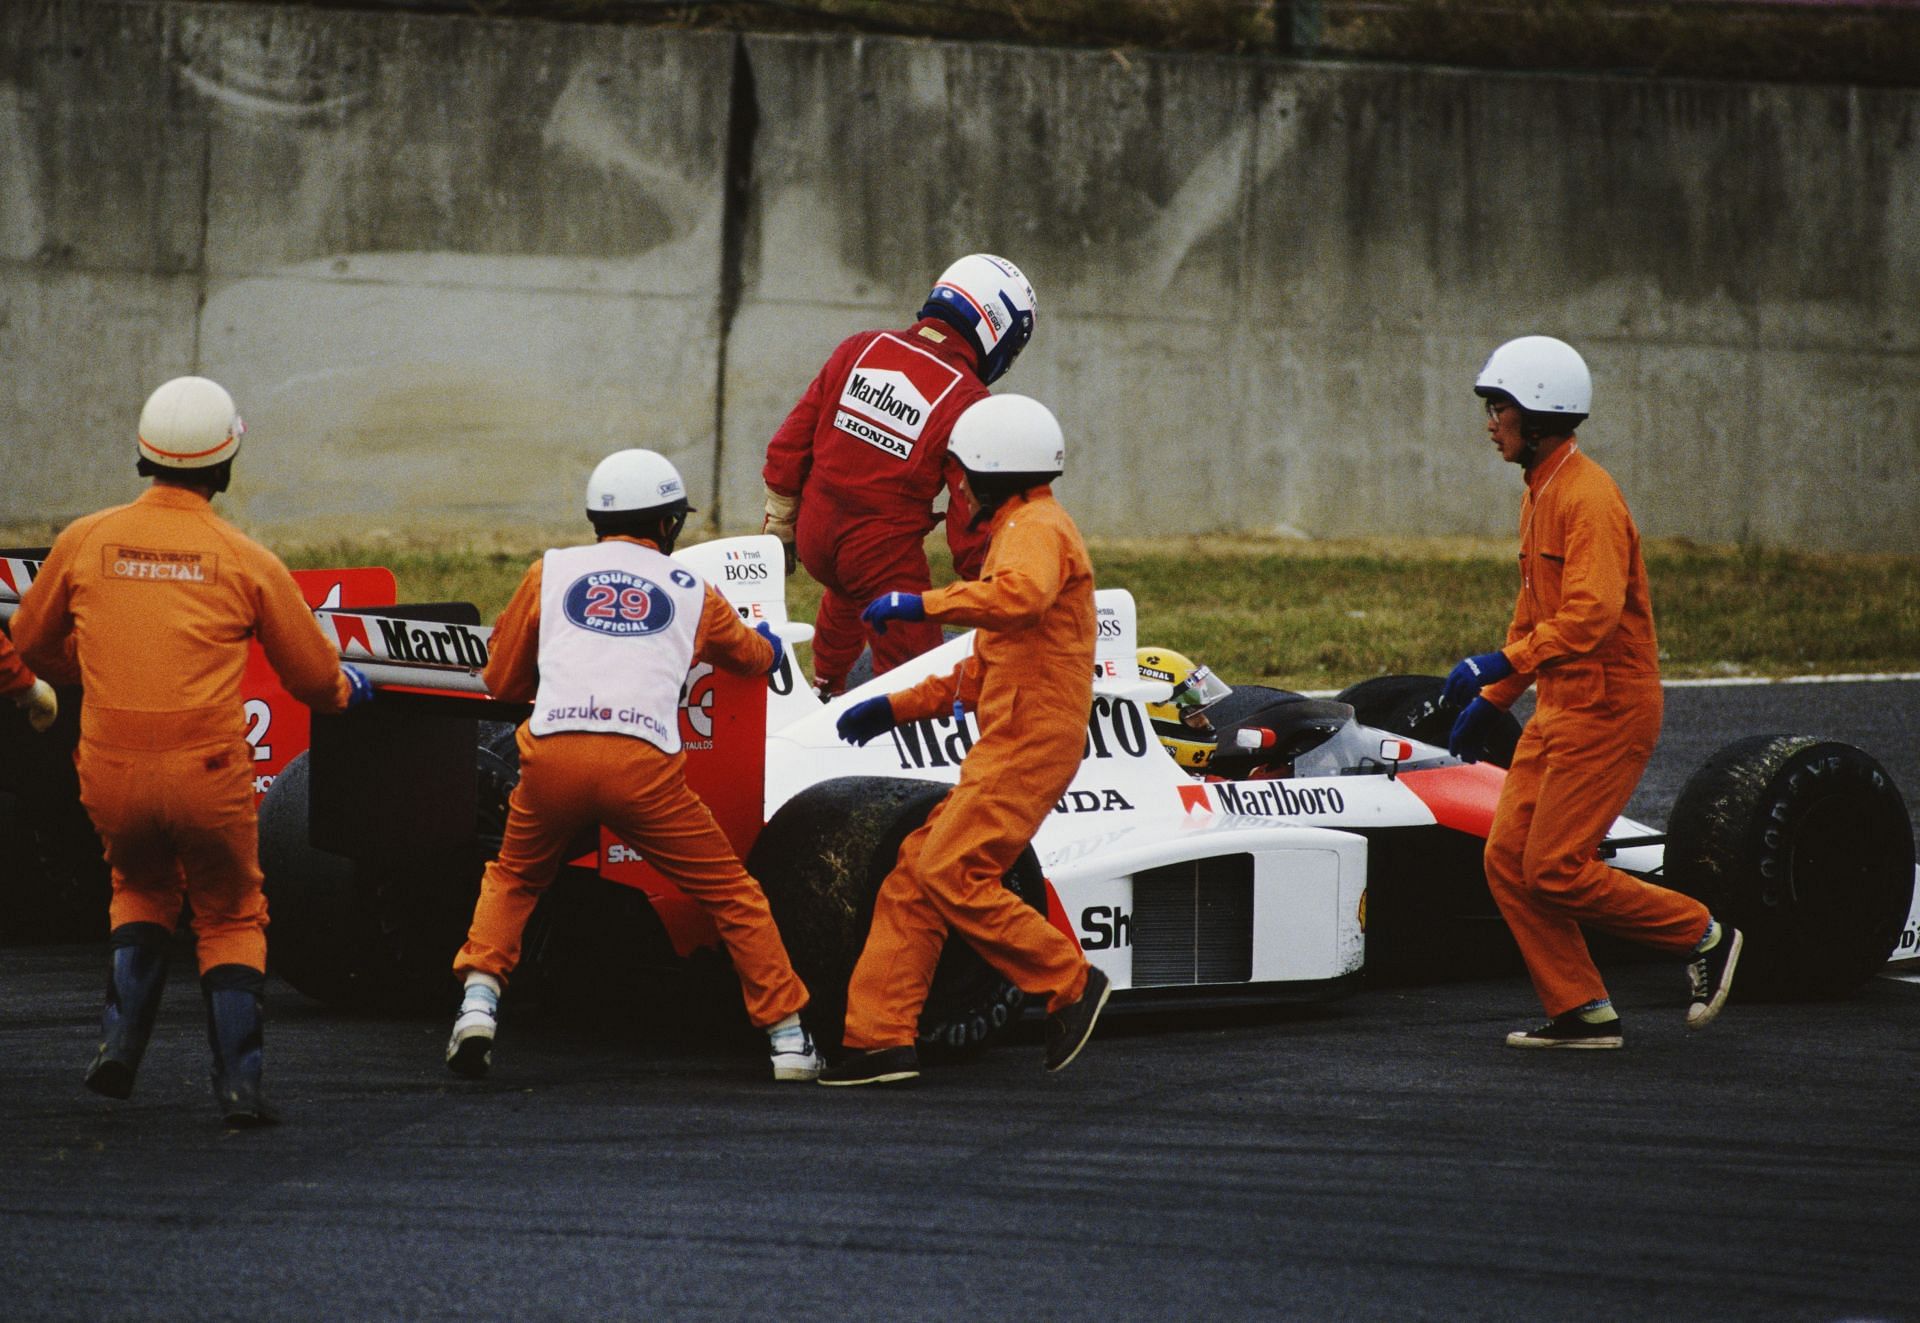 Watch Alternate Fan Angle Of Infamous Suzuka Incident Between Ayrton Senna And Alain Prost